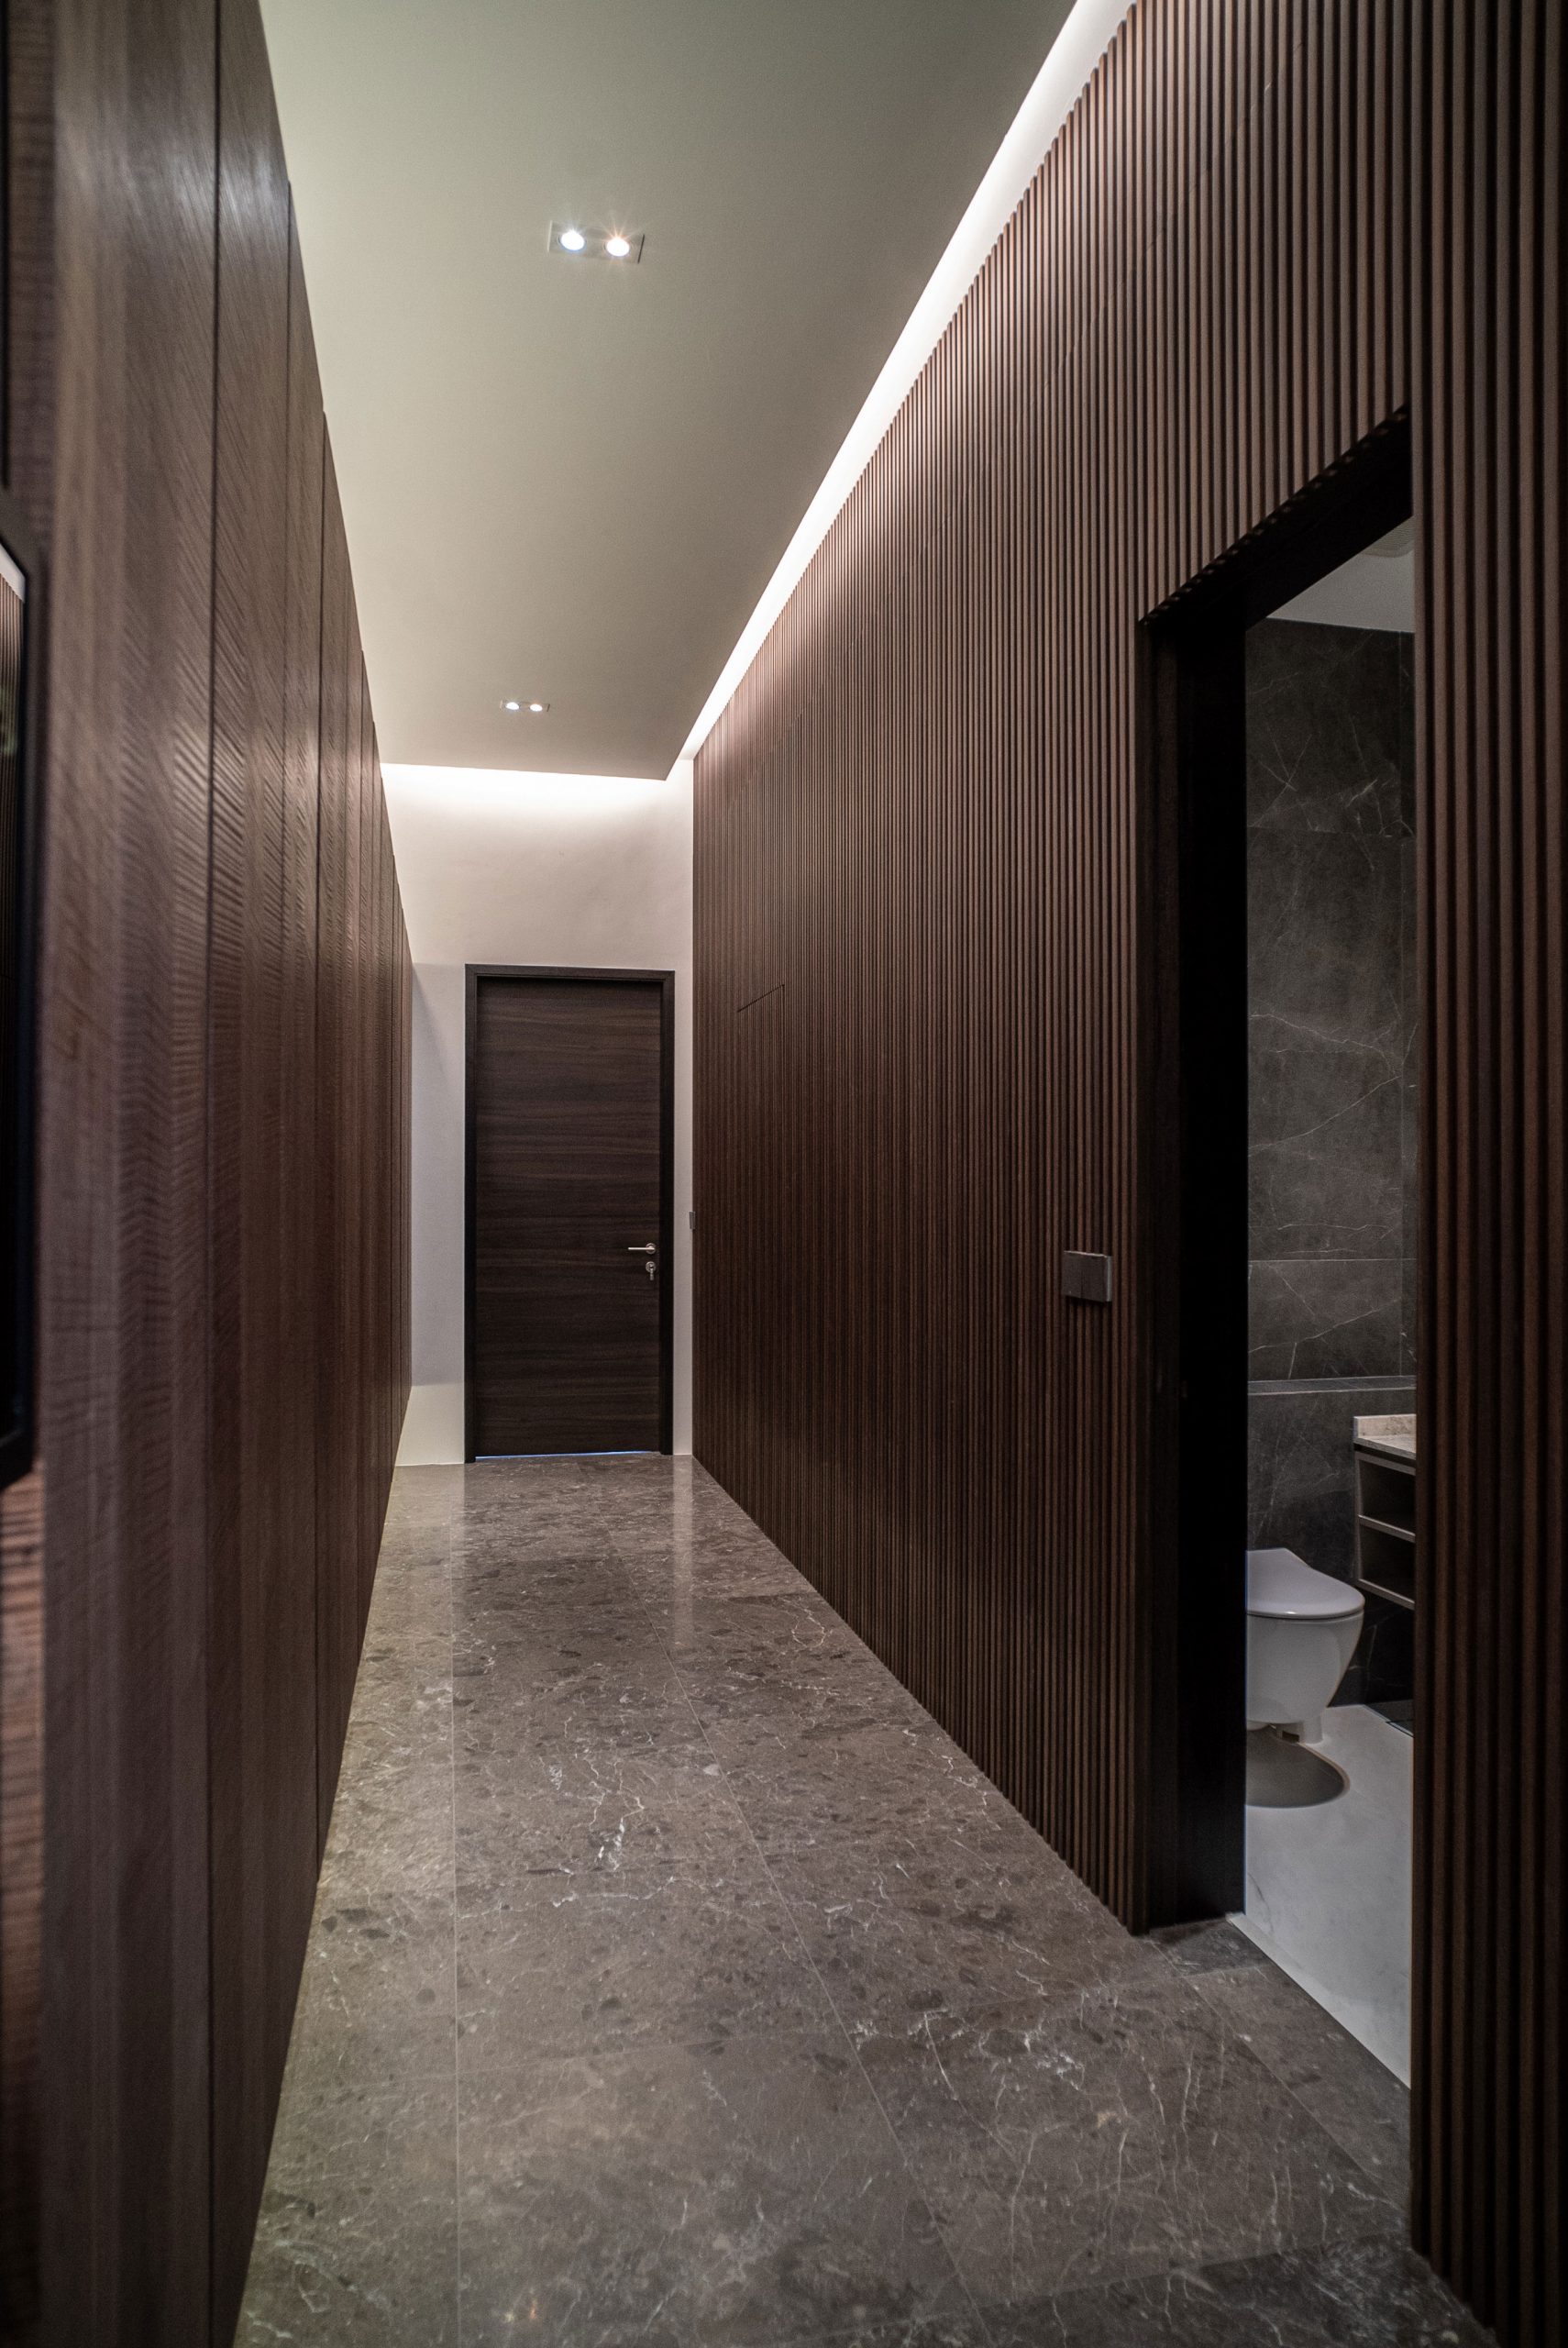 Fluted panel walkway interior design Minotti inspired home